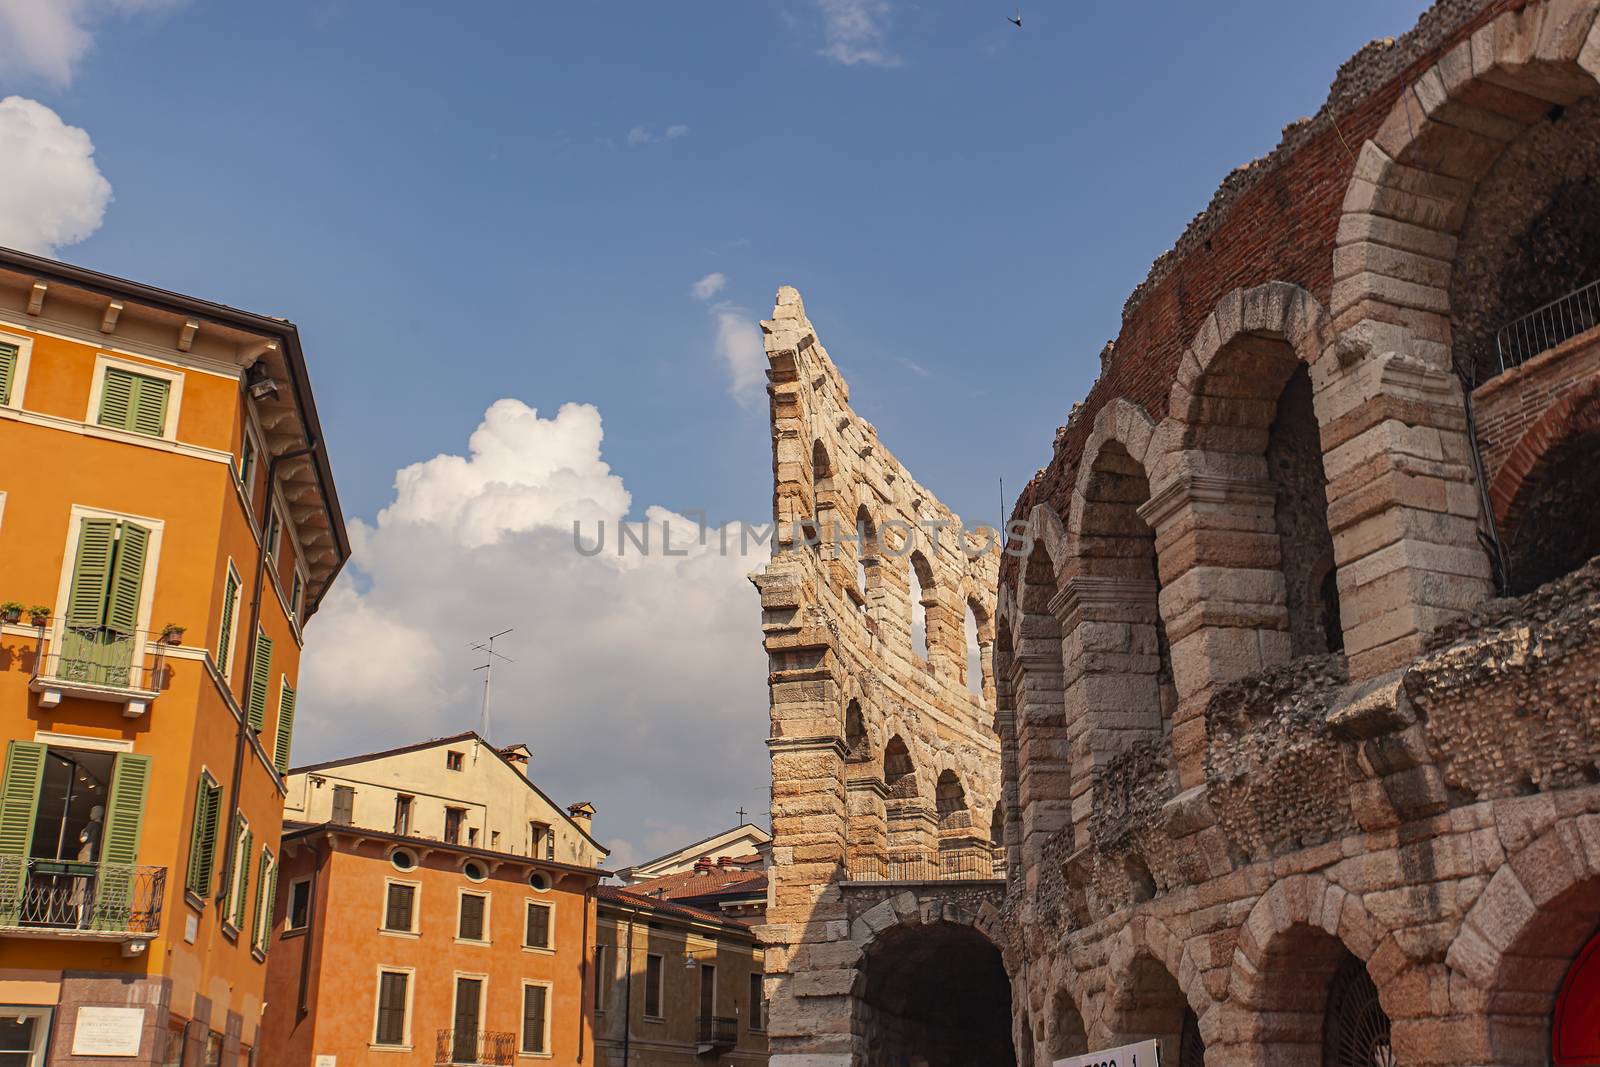 Arena di Verona Detail under a blue sky by pippocarlot